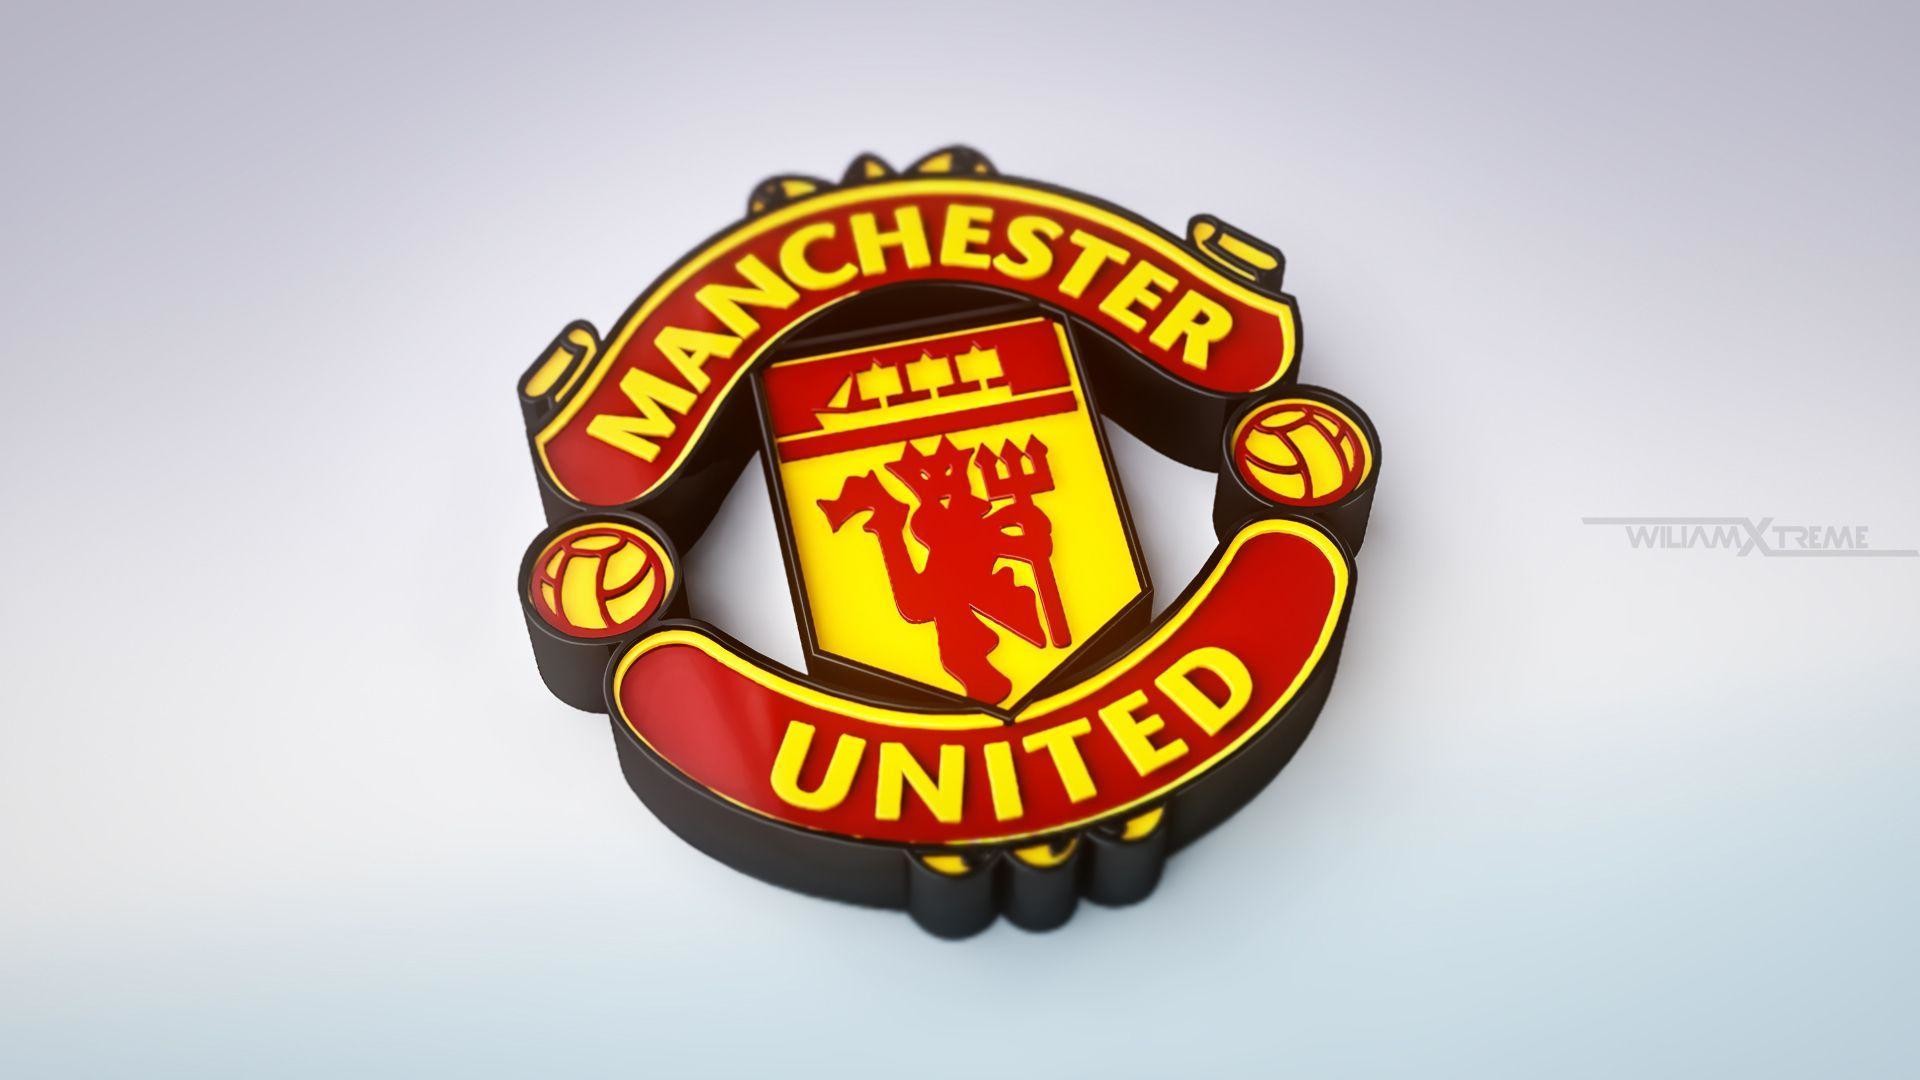 1920x1080 Manchester United Logo 3D Image Wallpaper Desktop Backgrounds Free